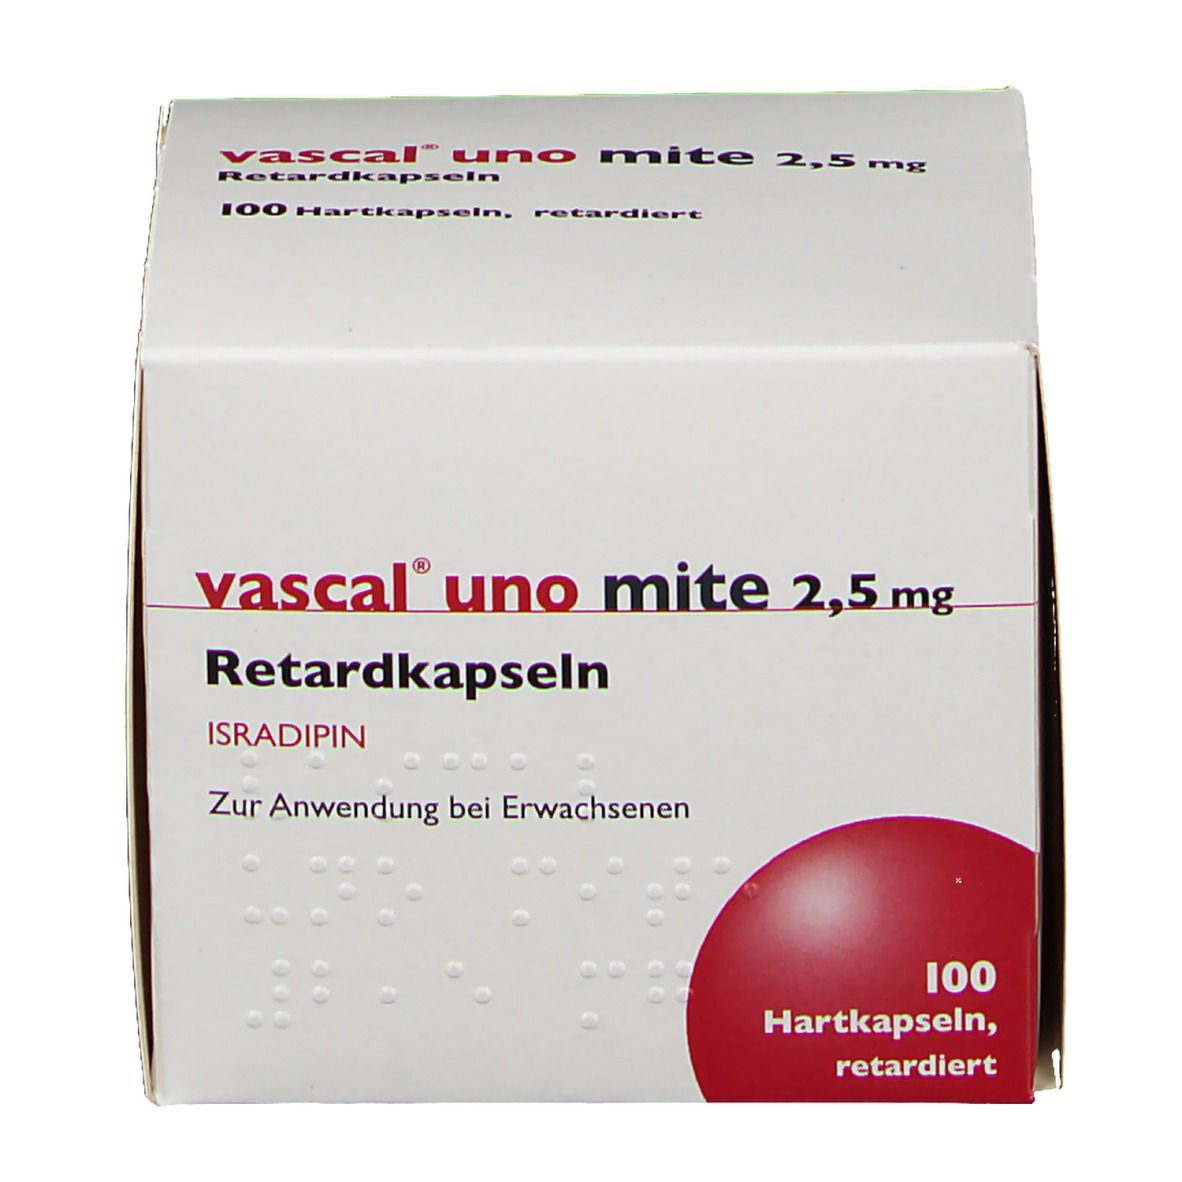 vascal® uno mite 2,5 mg